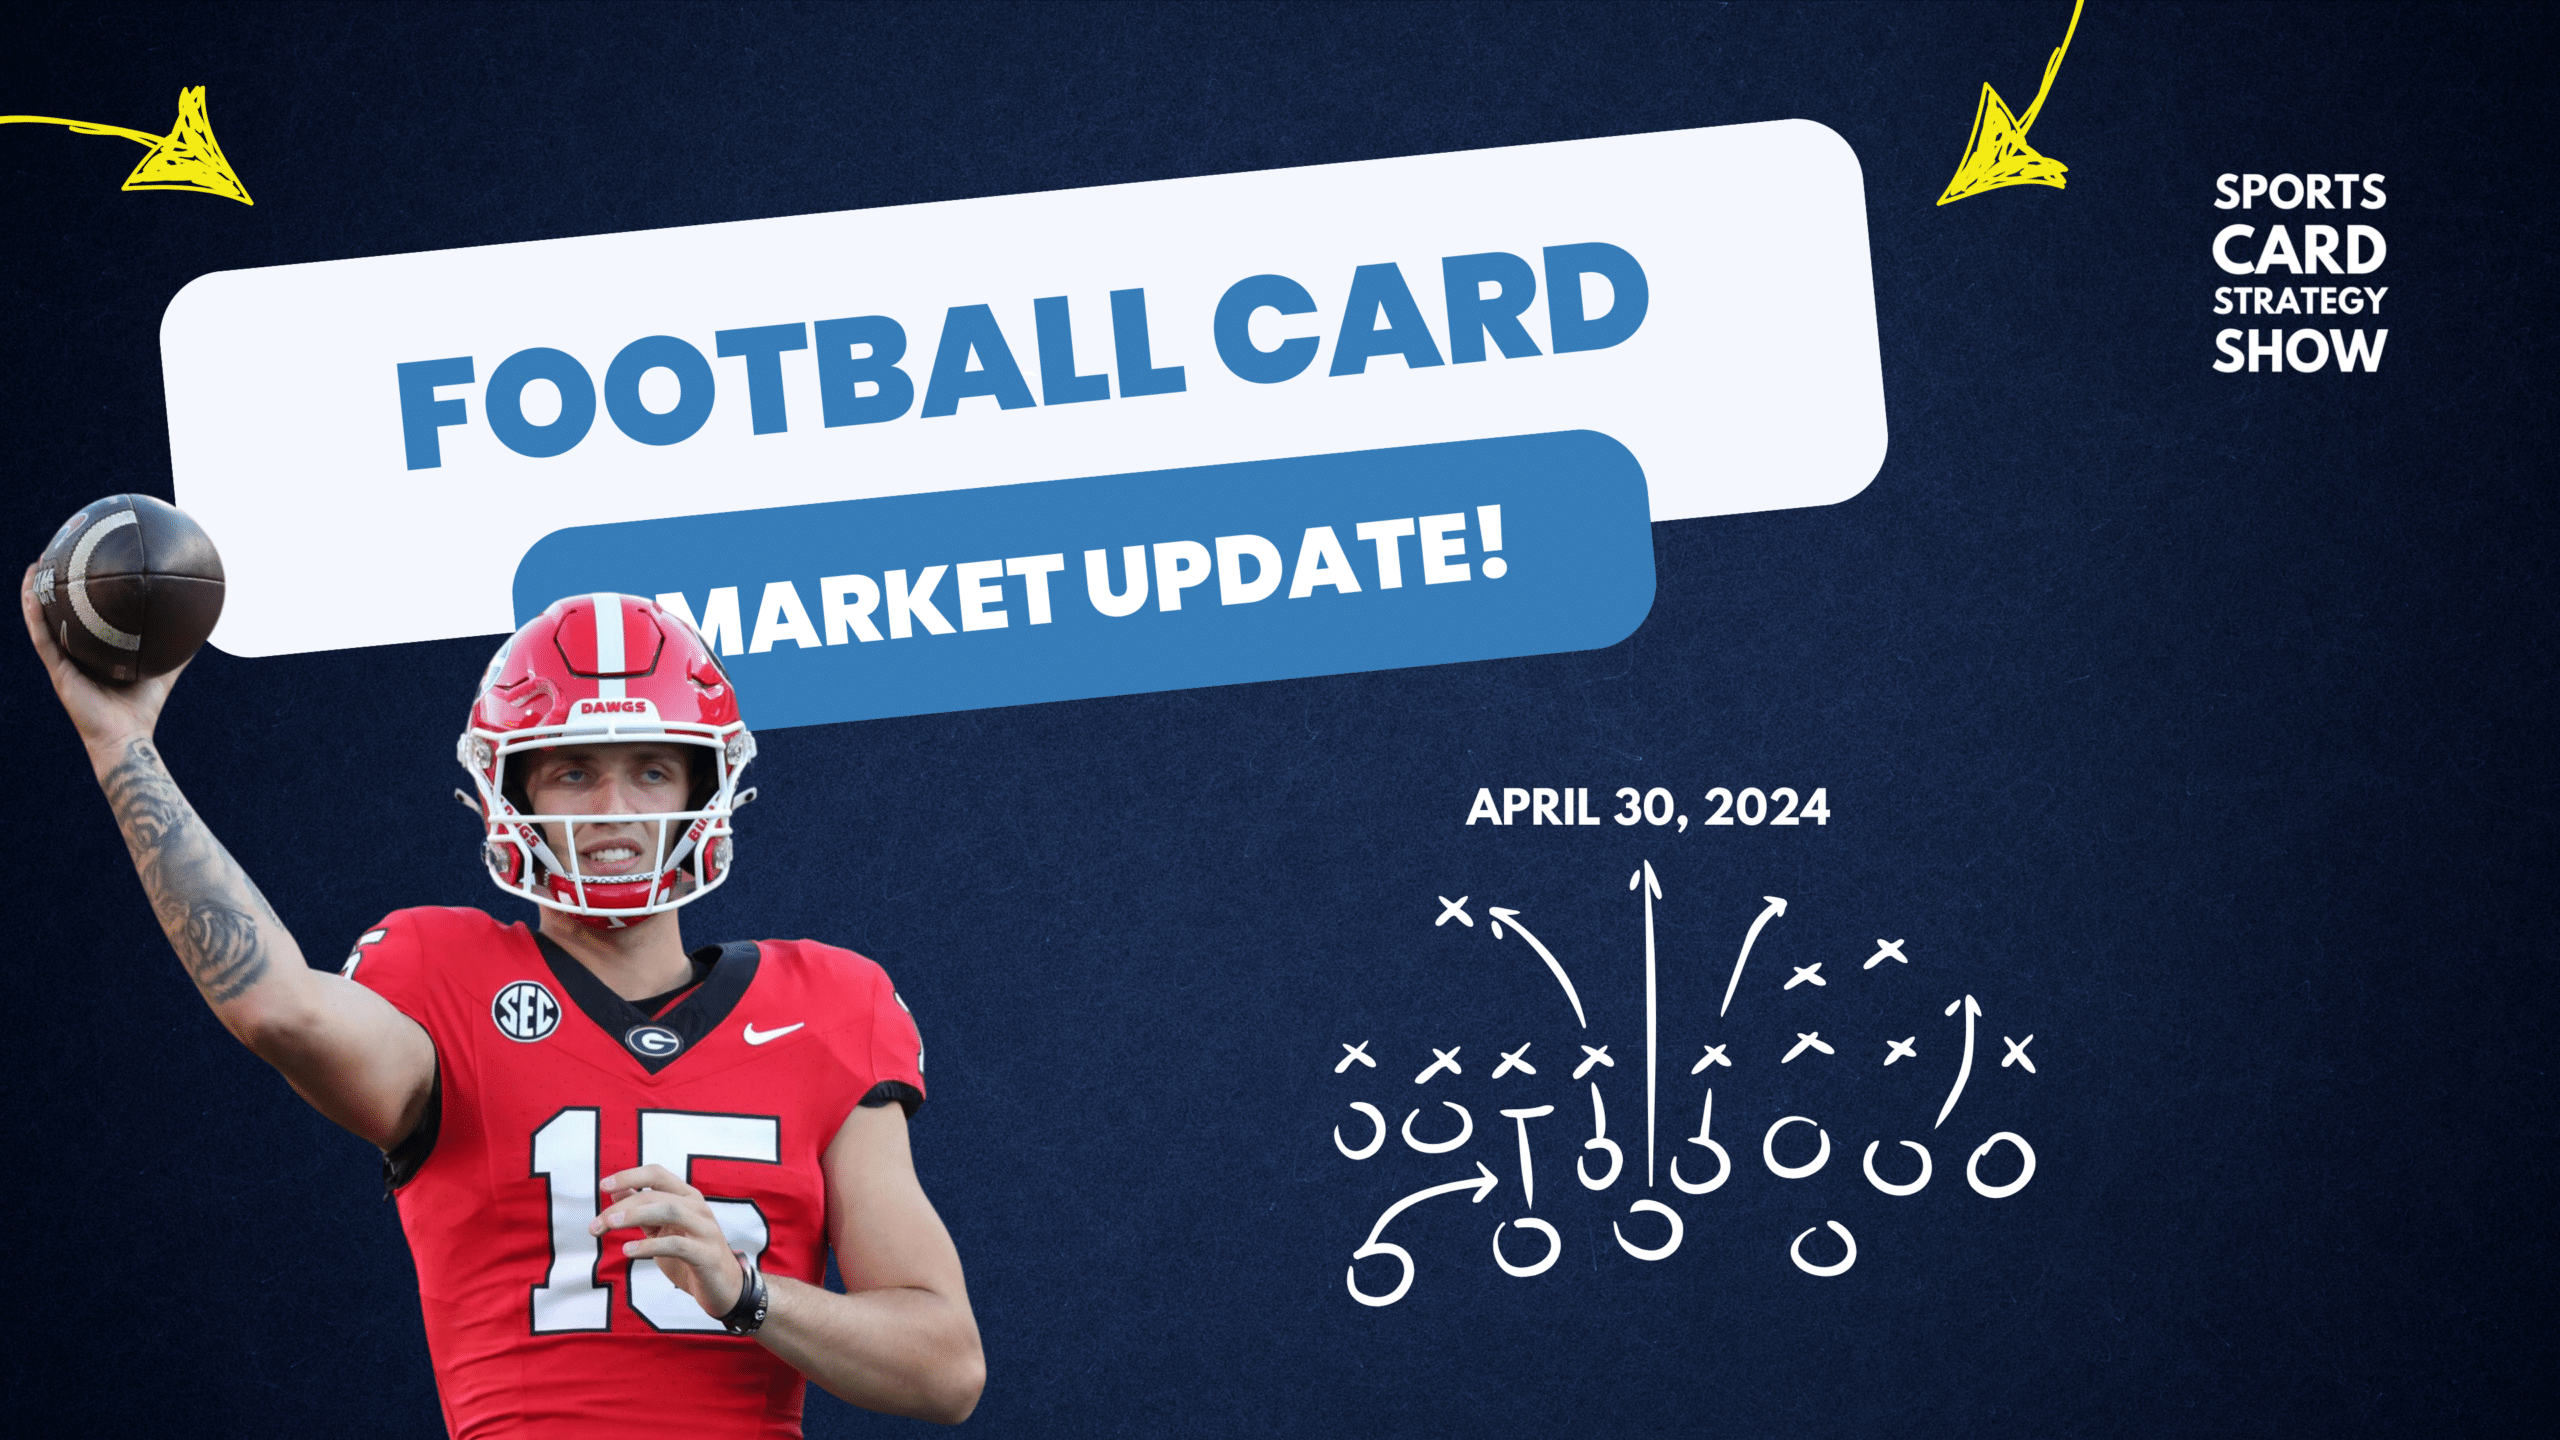 Football Card Market Update Tuesday, April 30, 2024